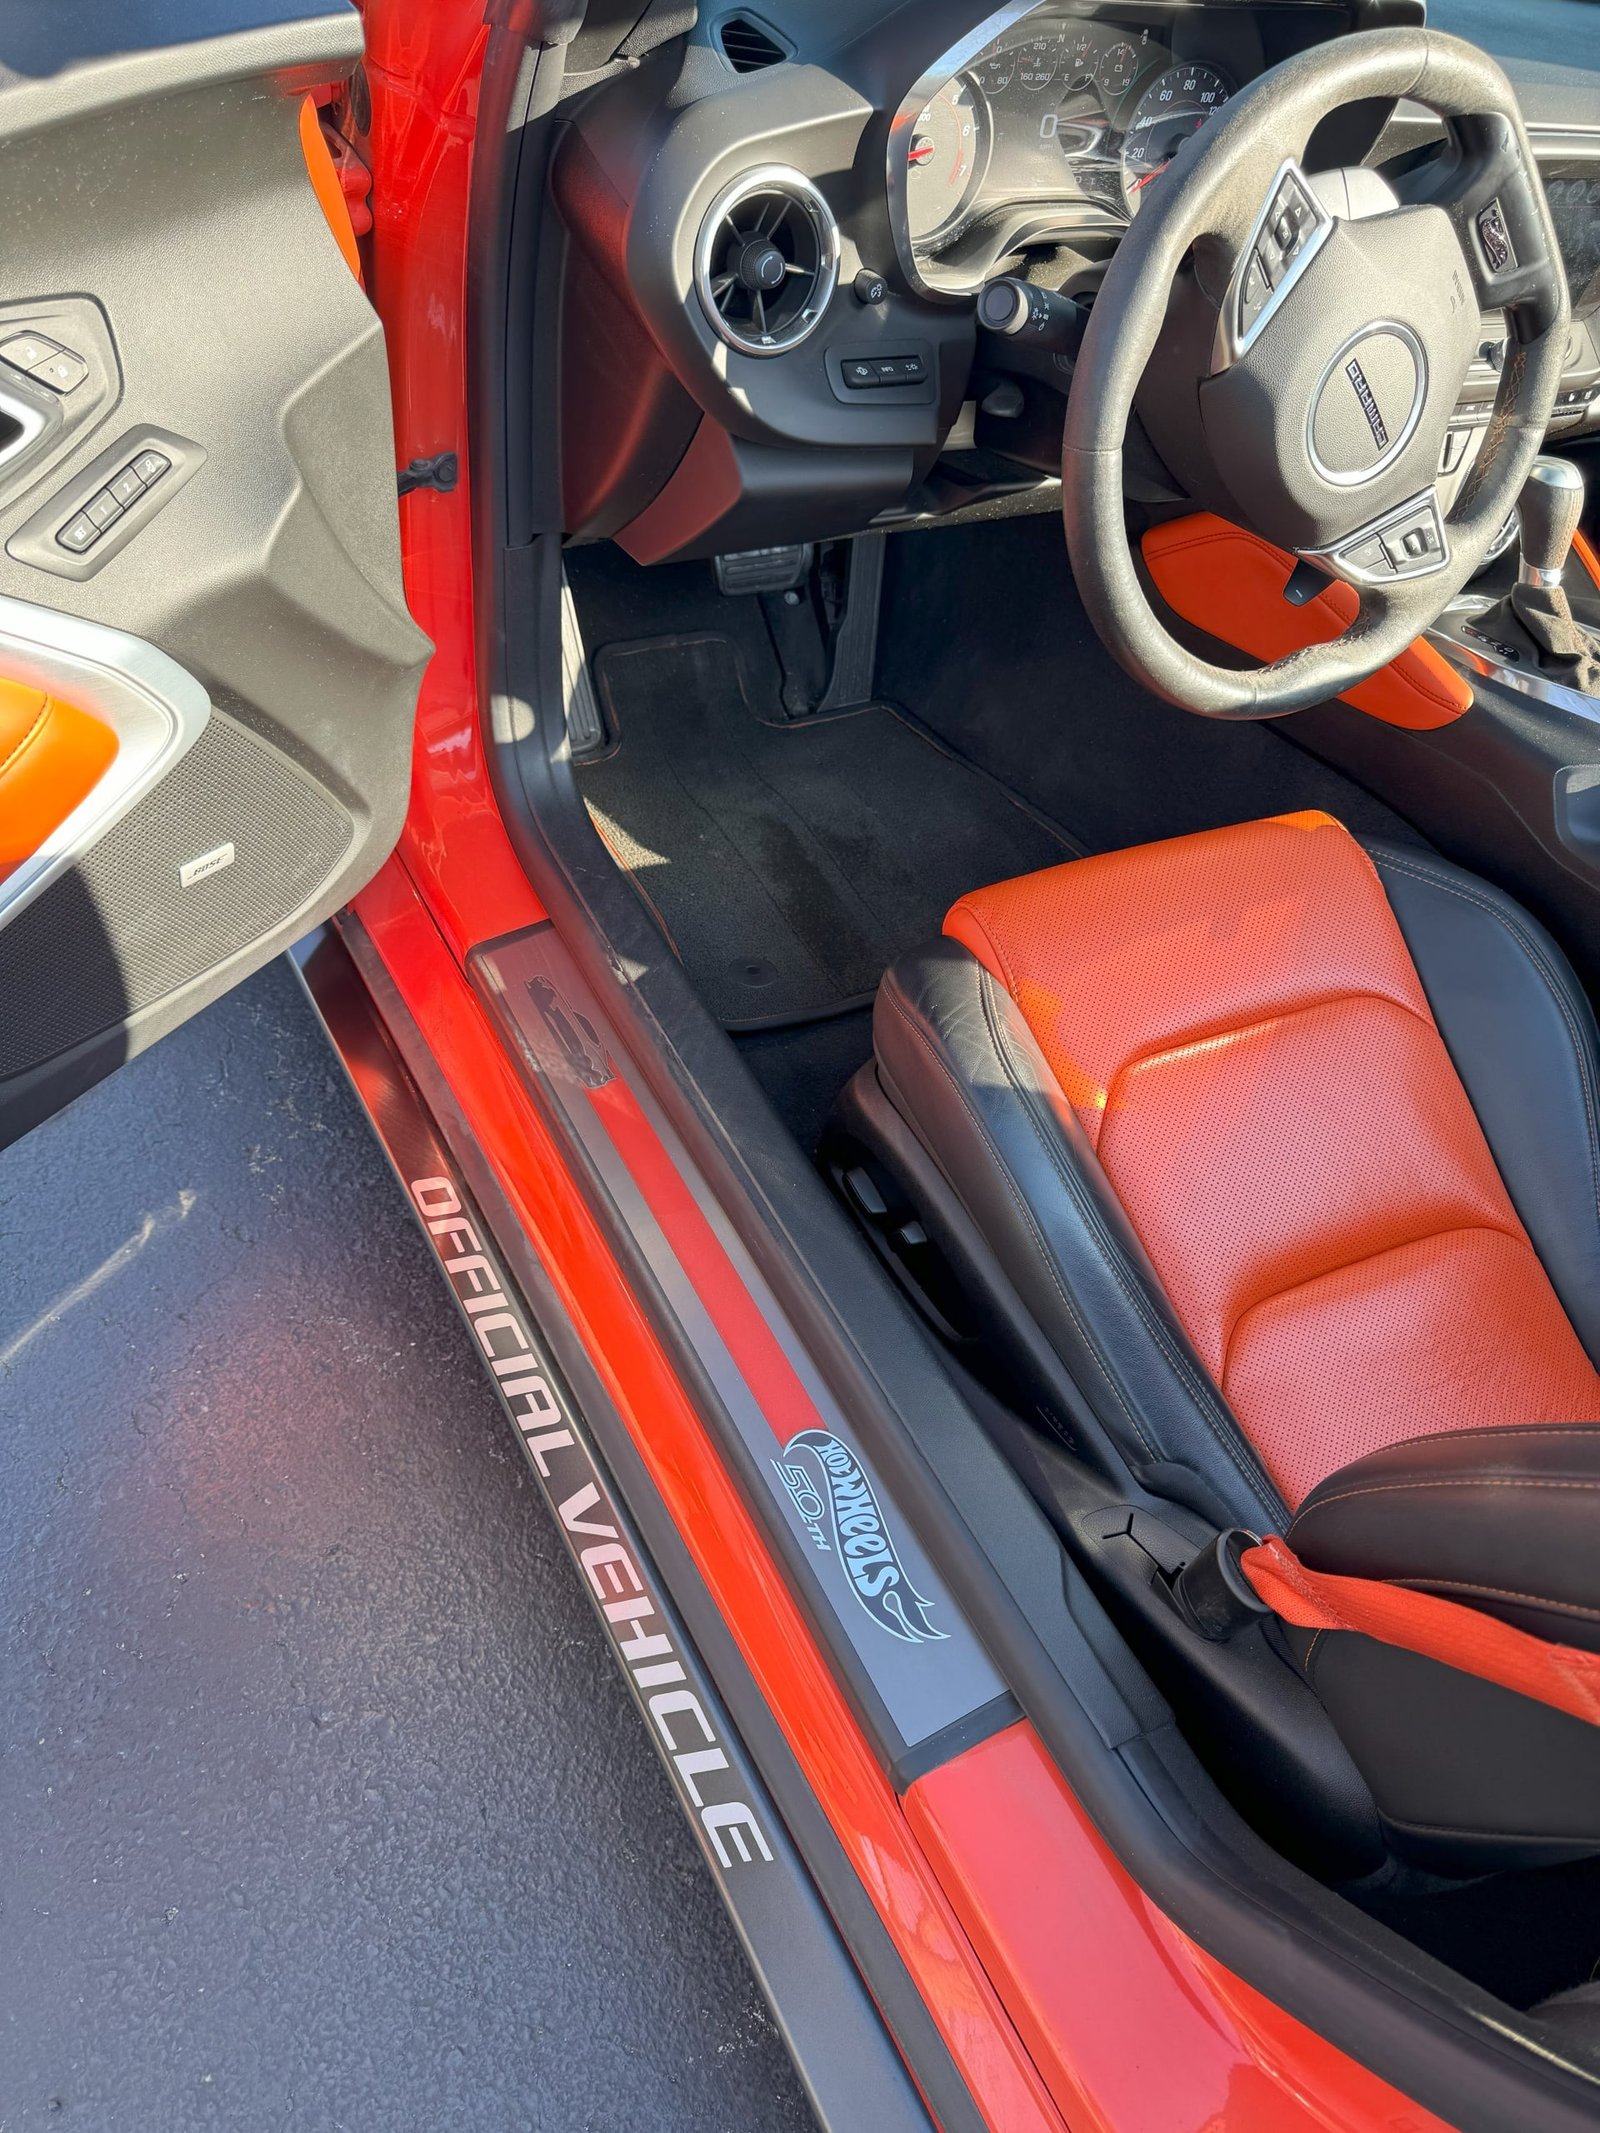 2018 Chevrolet Camaro Hot Wheels Indy 500 Edition Convertible (14)